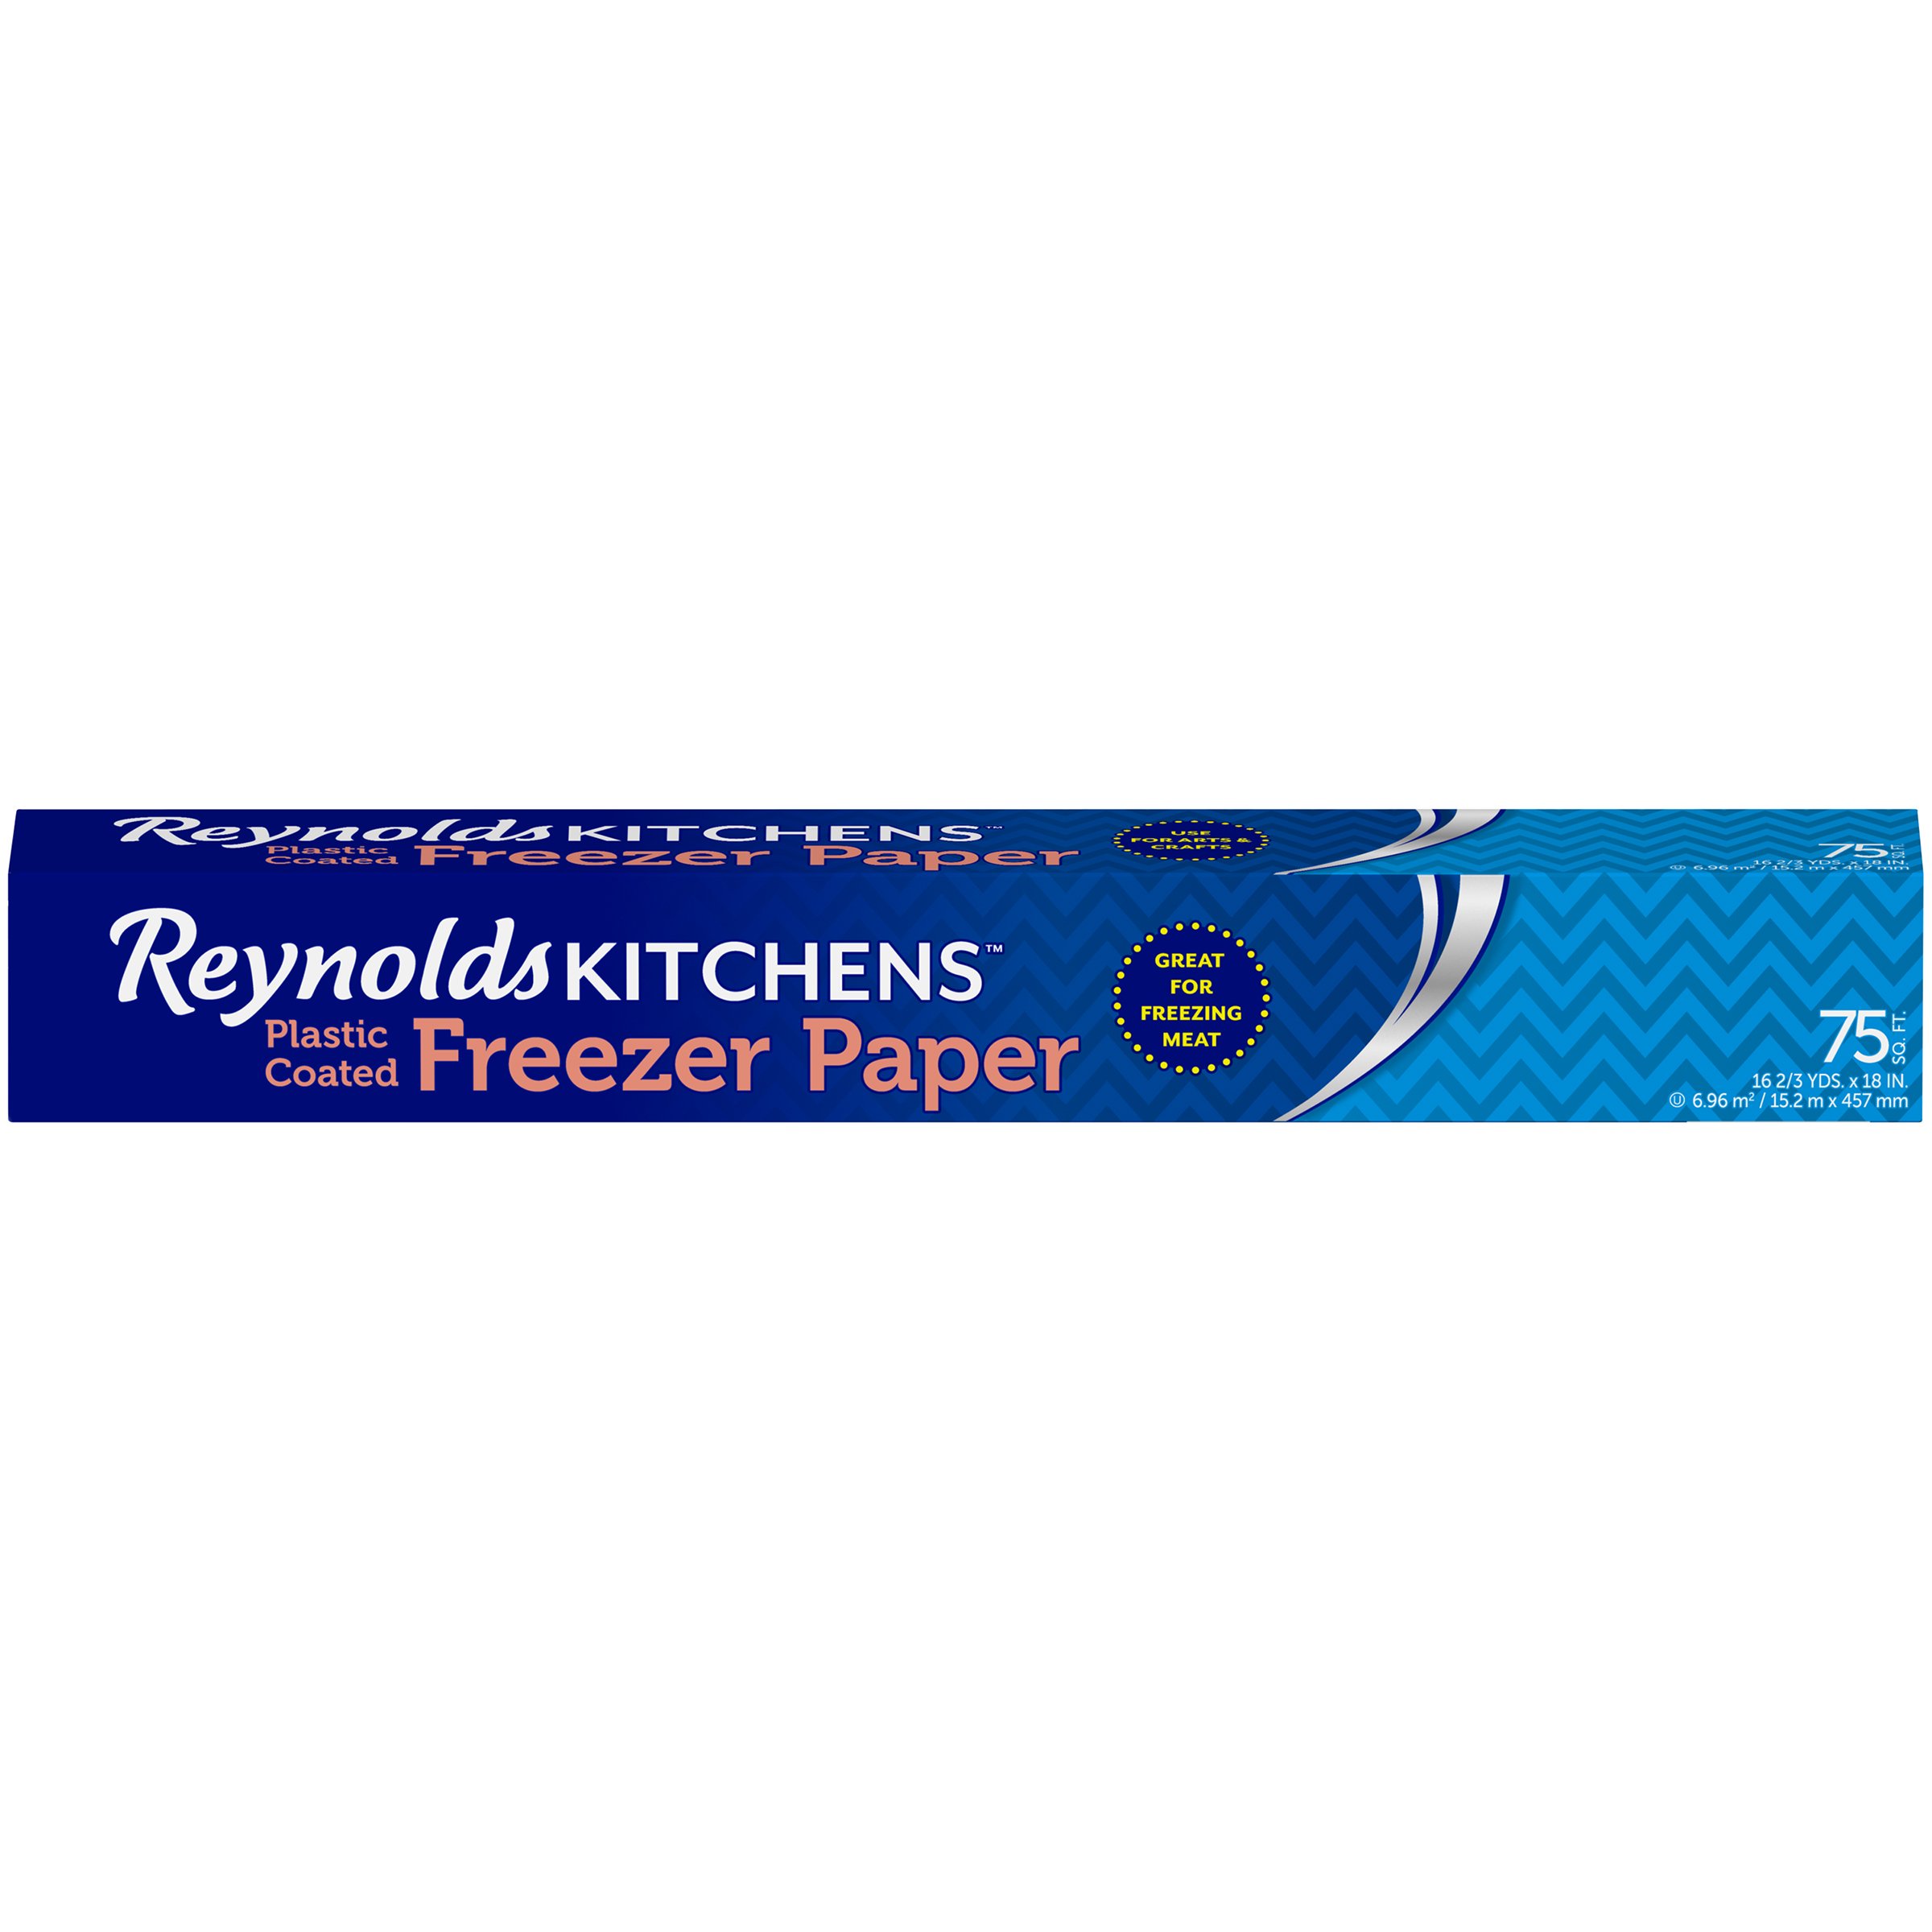 Reynolds Kitchens Freezer Paper, Plastic Coated, 50 Square Feet